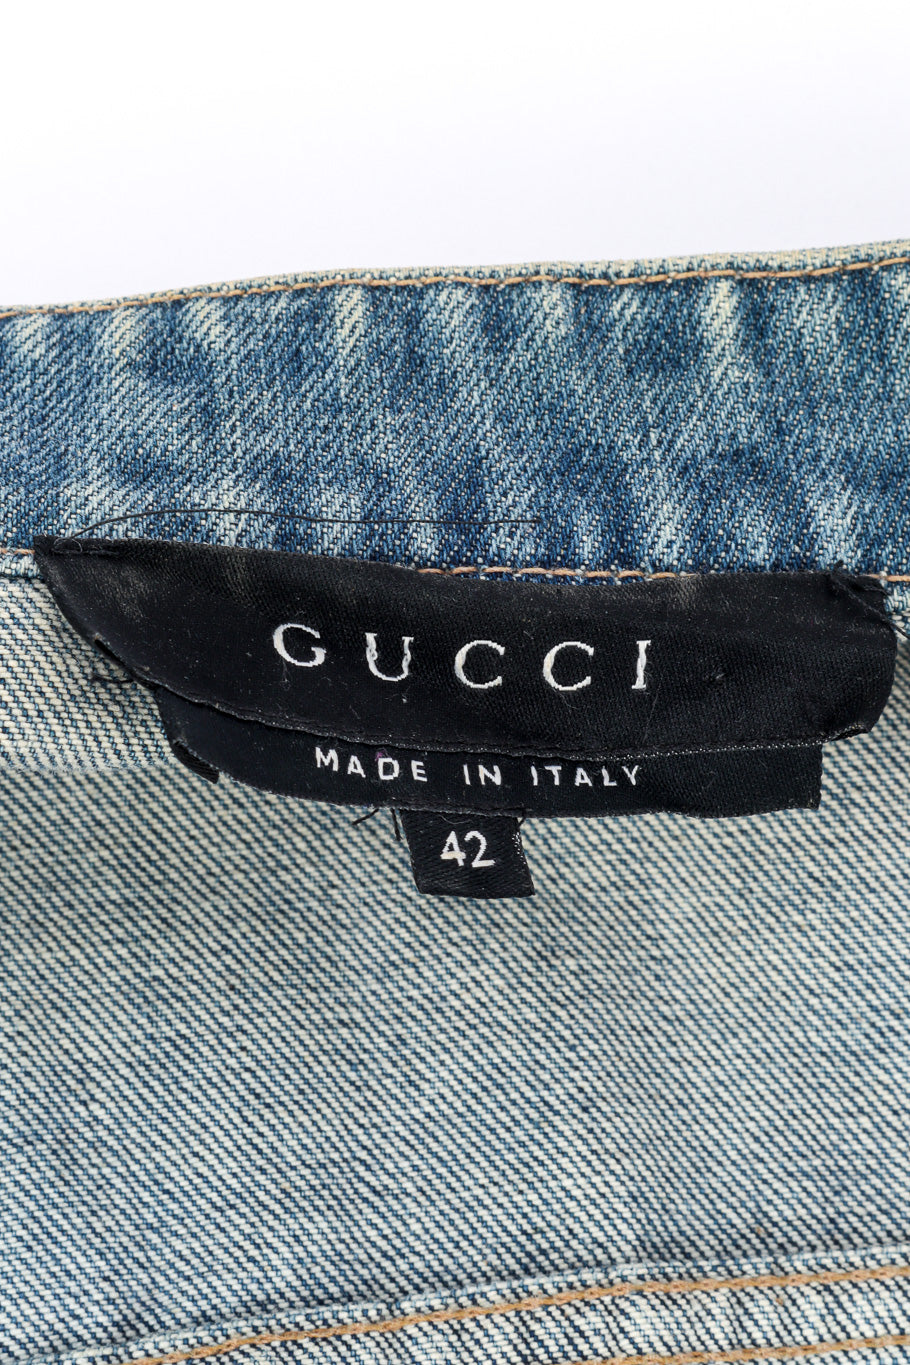 Bamboo Belt Denim Jacket by Gucci label @recessla